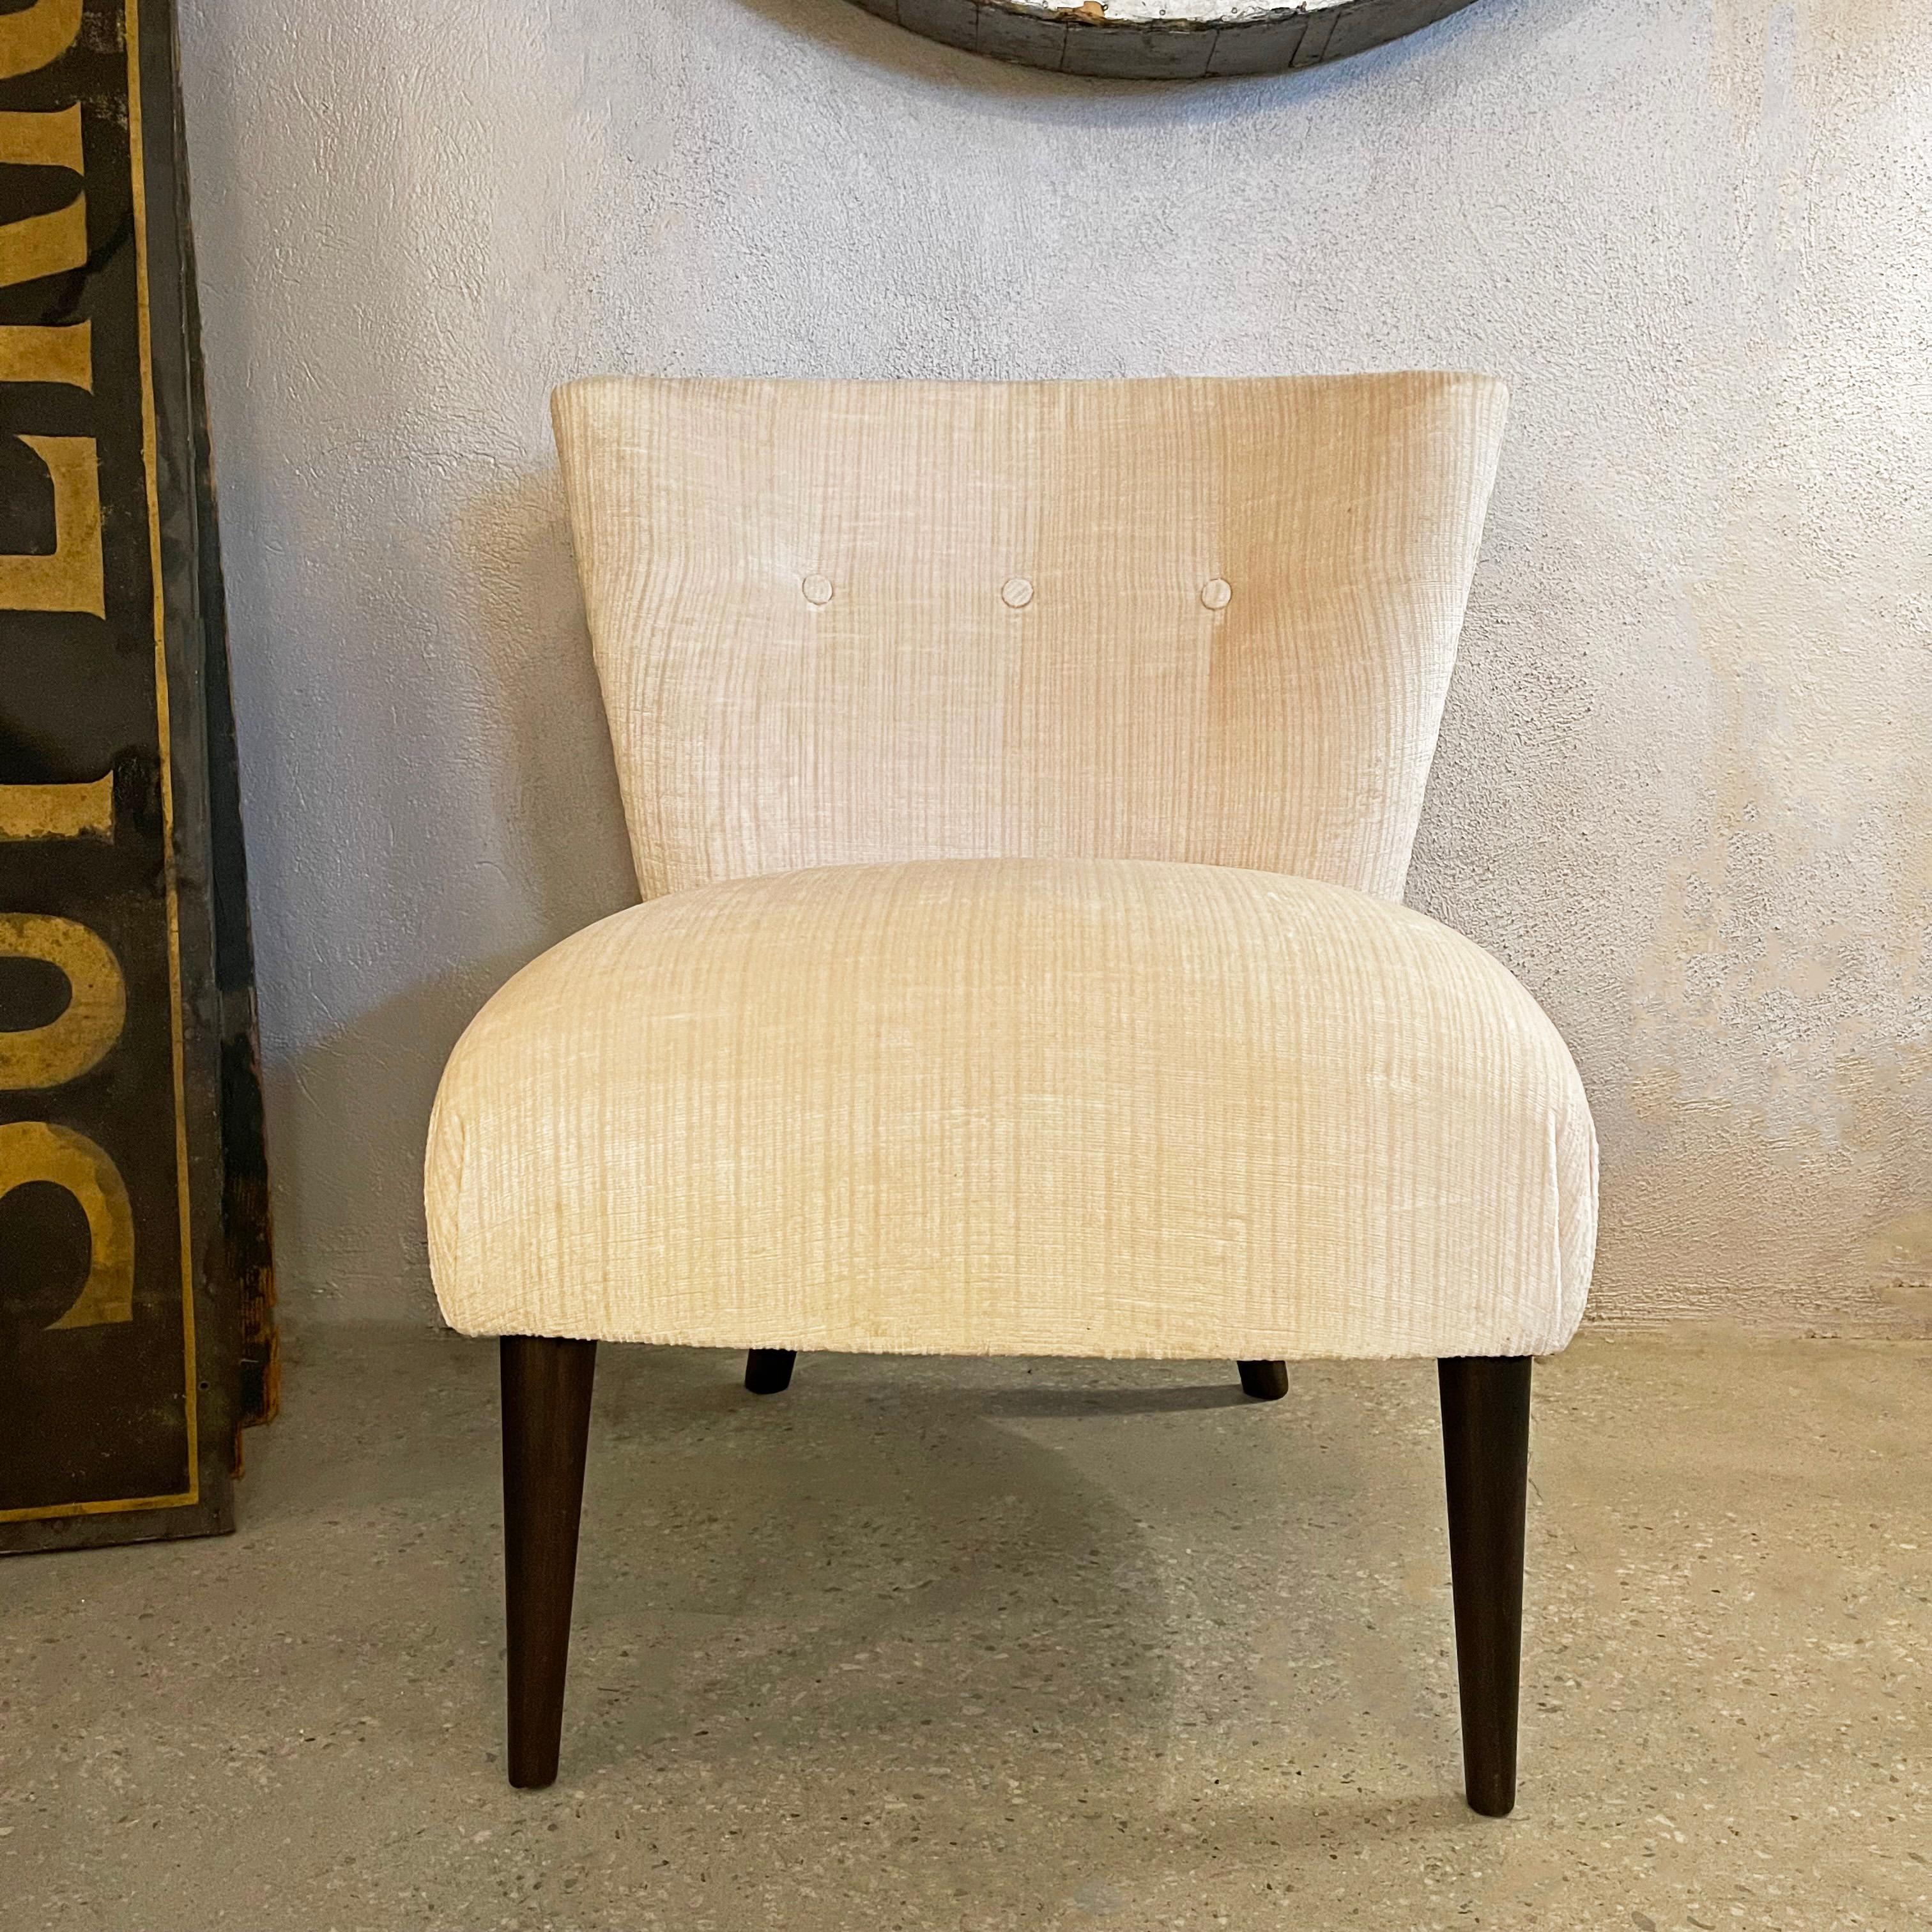 Midcentury, Hollywood regency, slipper chair by Kroehler upholstered in textured, cream velvet with lacquered rosewood legs.